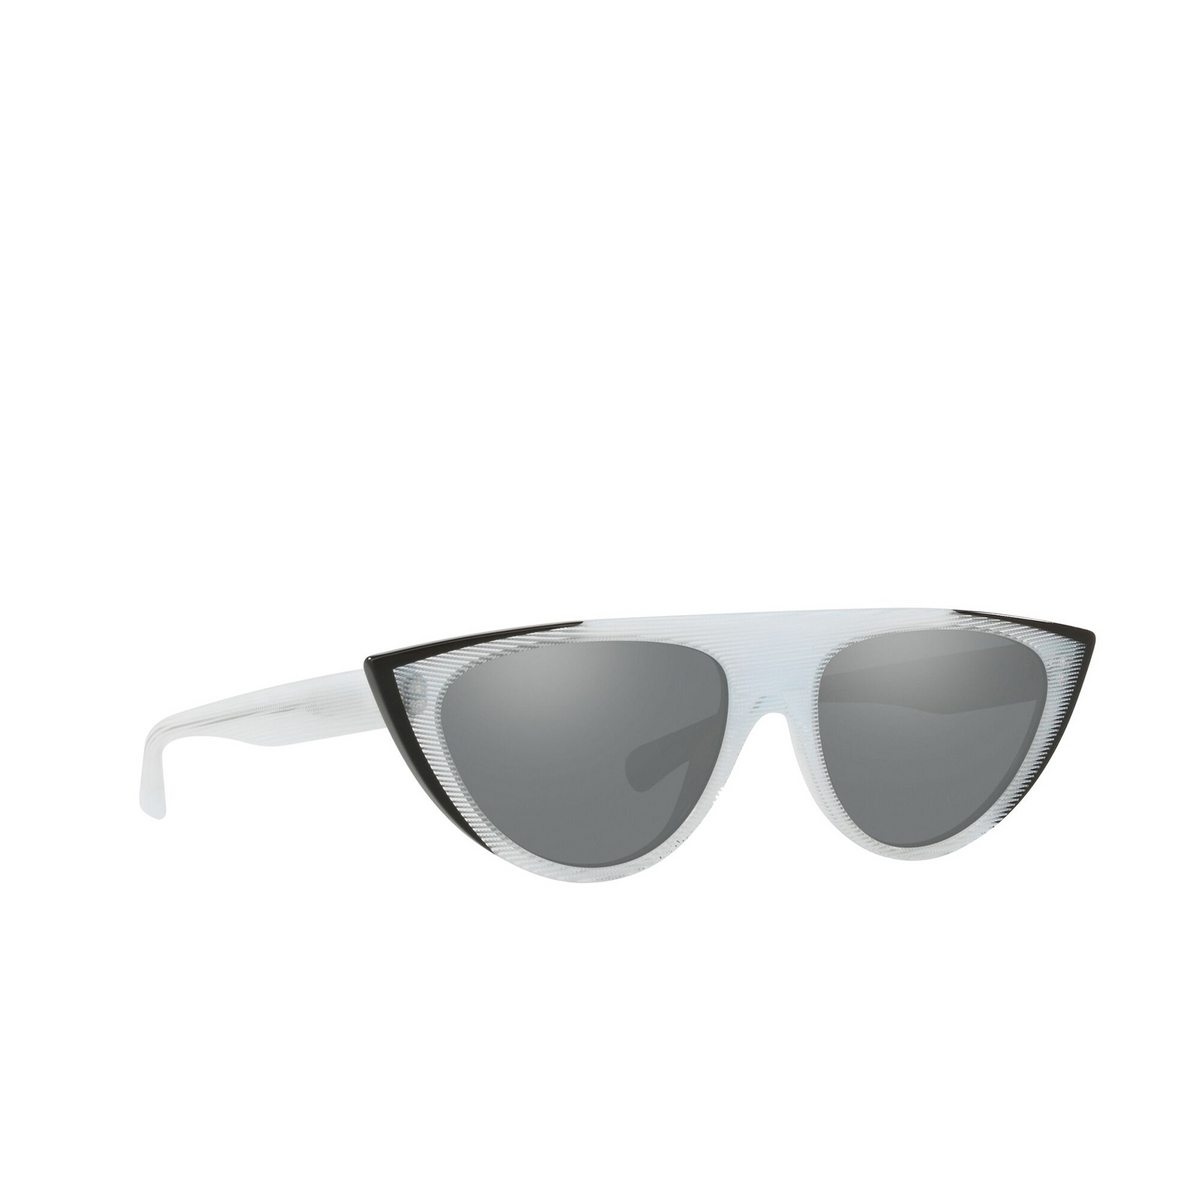 Alain Mikli® Irregular Sunglasses: Miss J A05031 color Black / White Pointille 007/6G - three-quarters view.